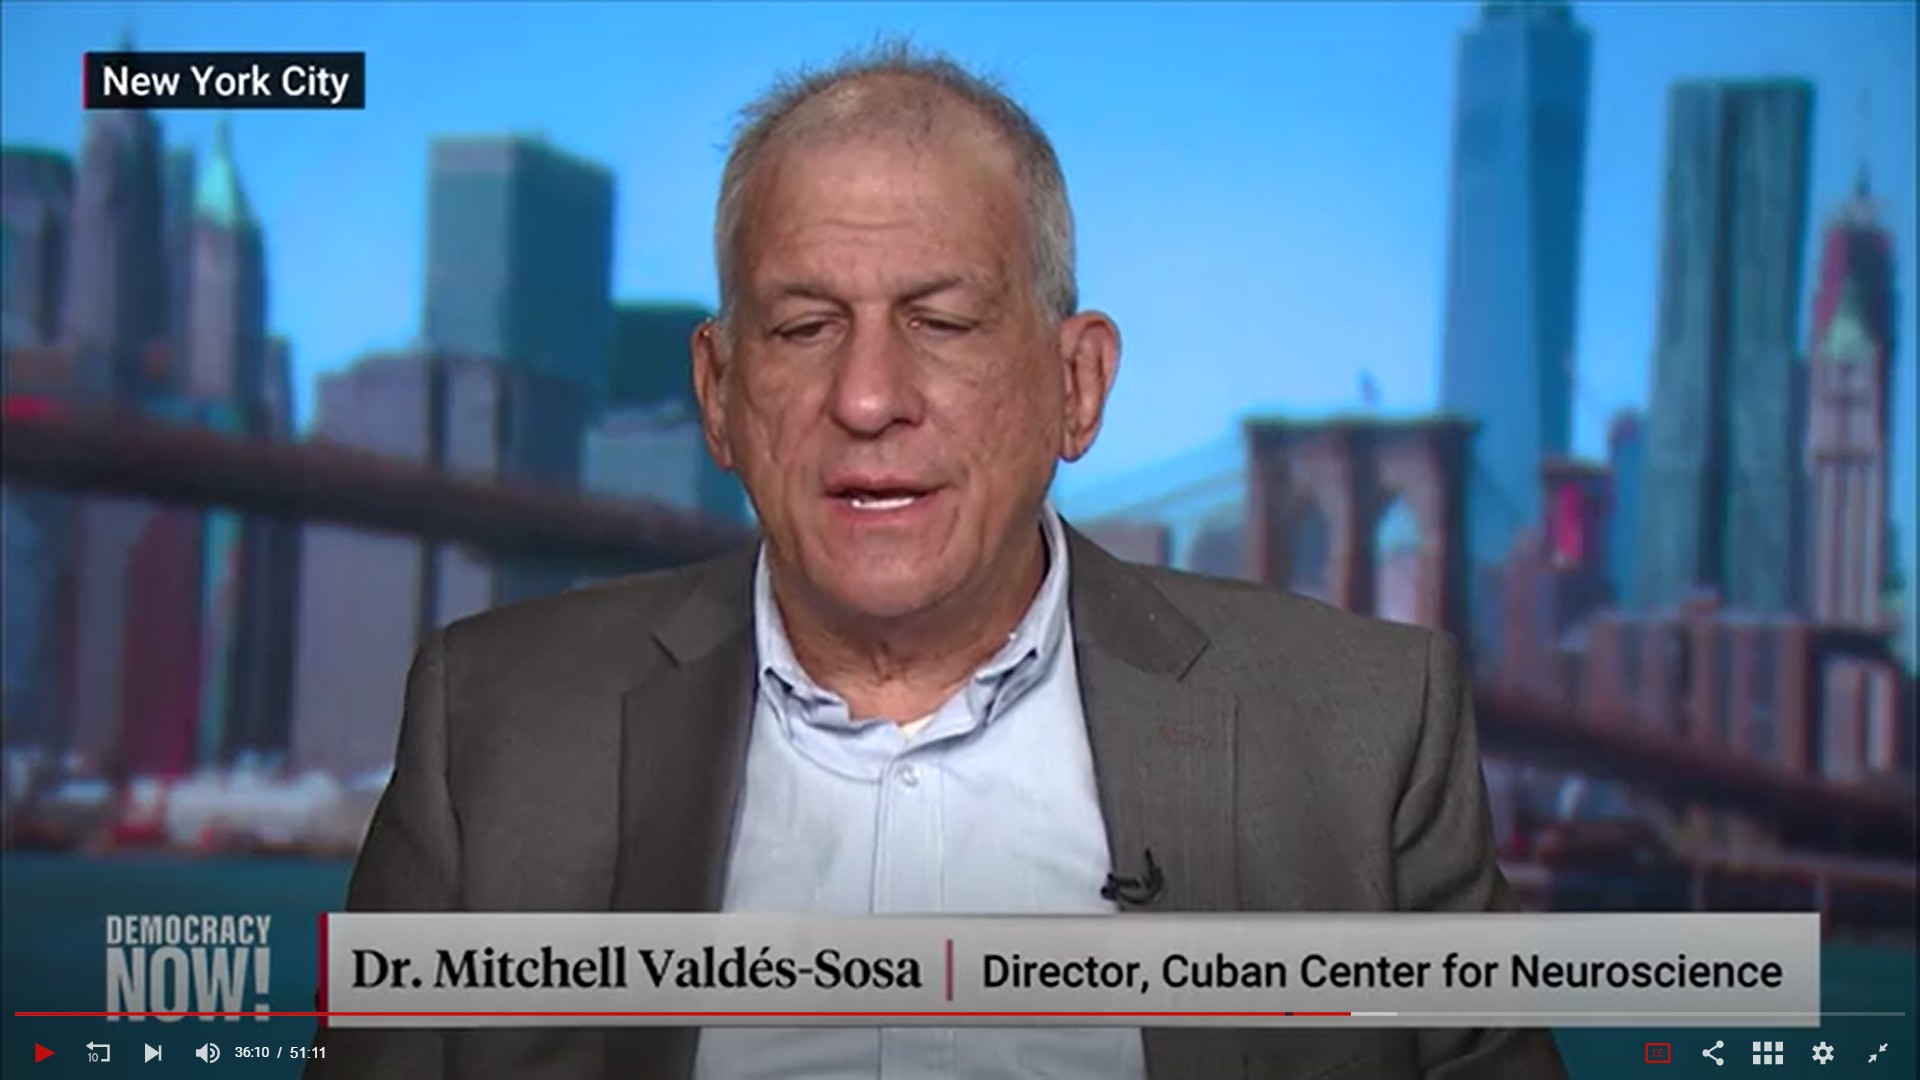 Screenshot: Dr. Valdes-Sosa on Democracy Now TV Show